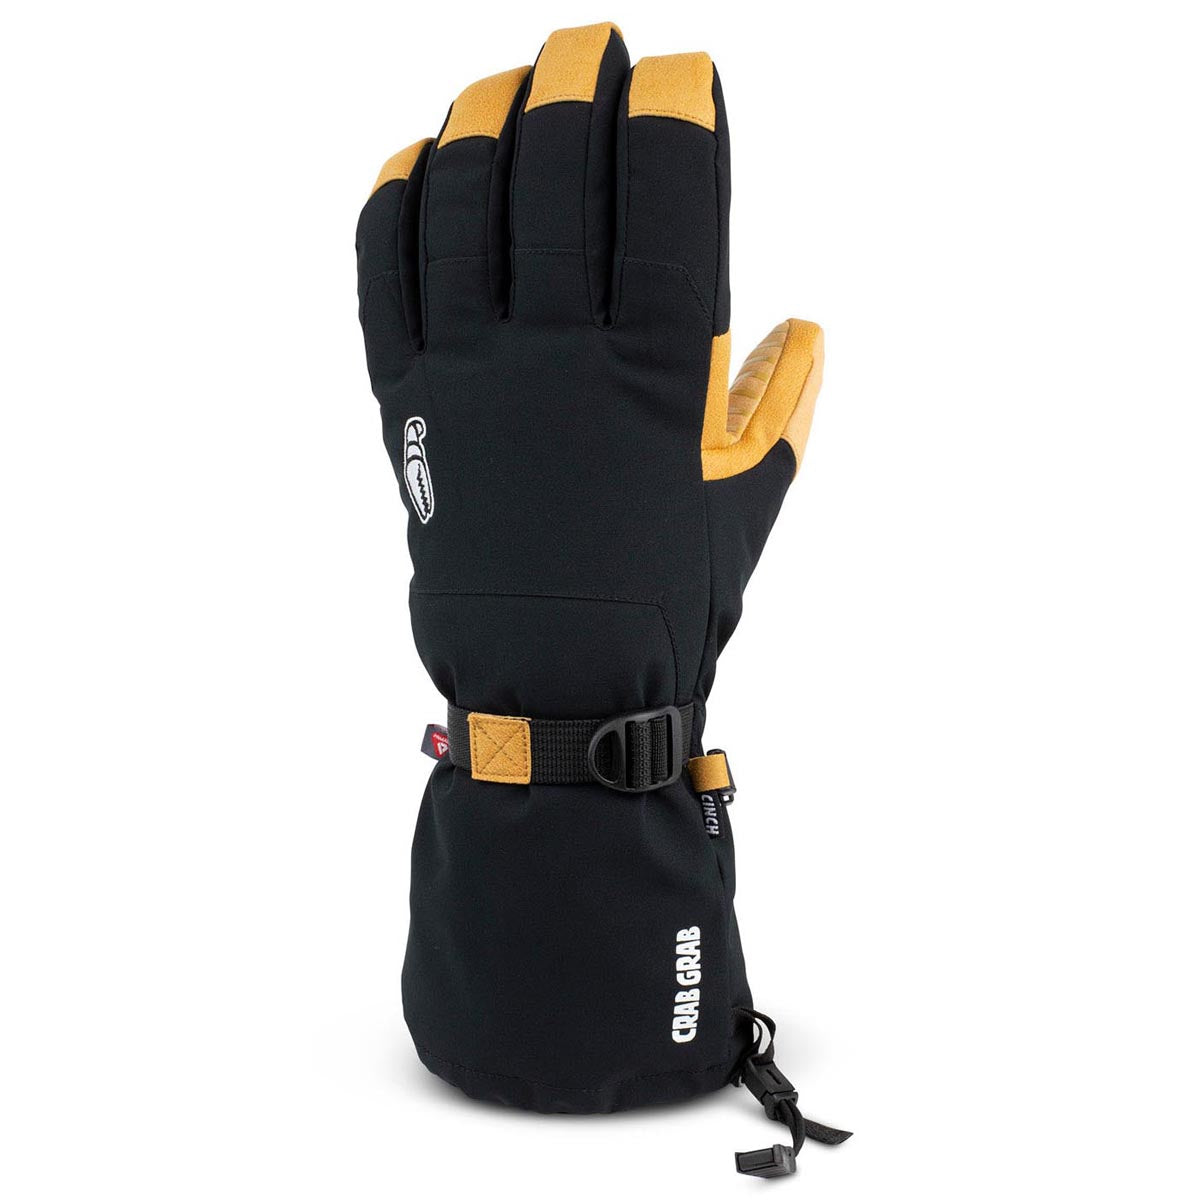 Crab Grab Cinch Snowboard Gloves - Black/Tan image 1